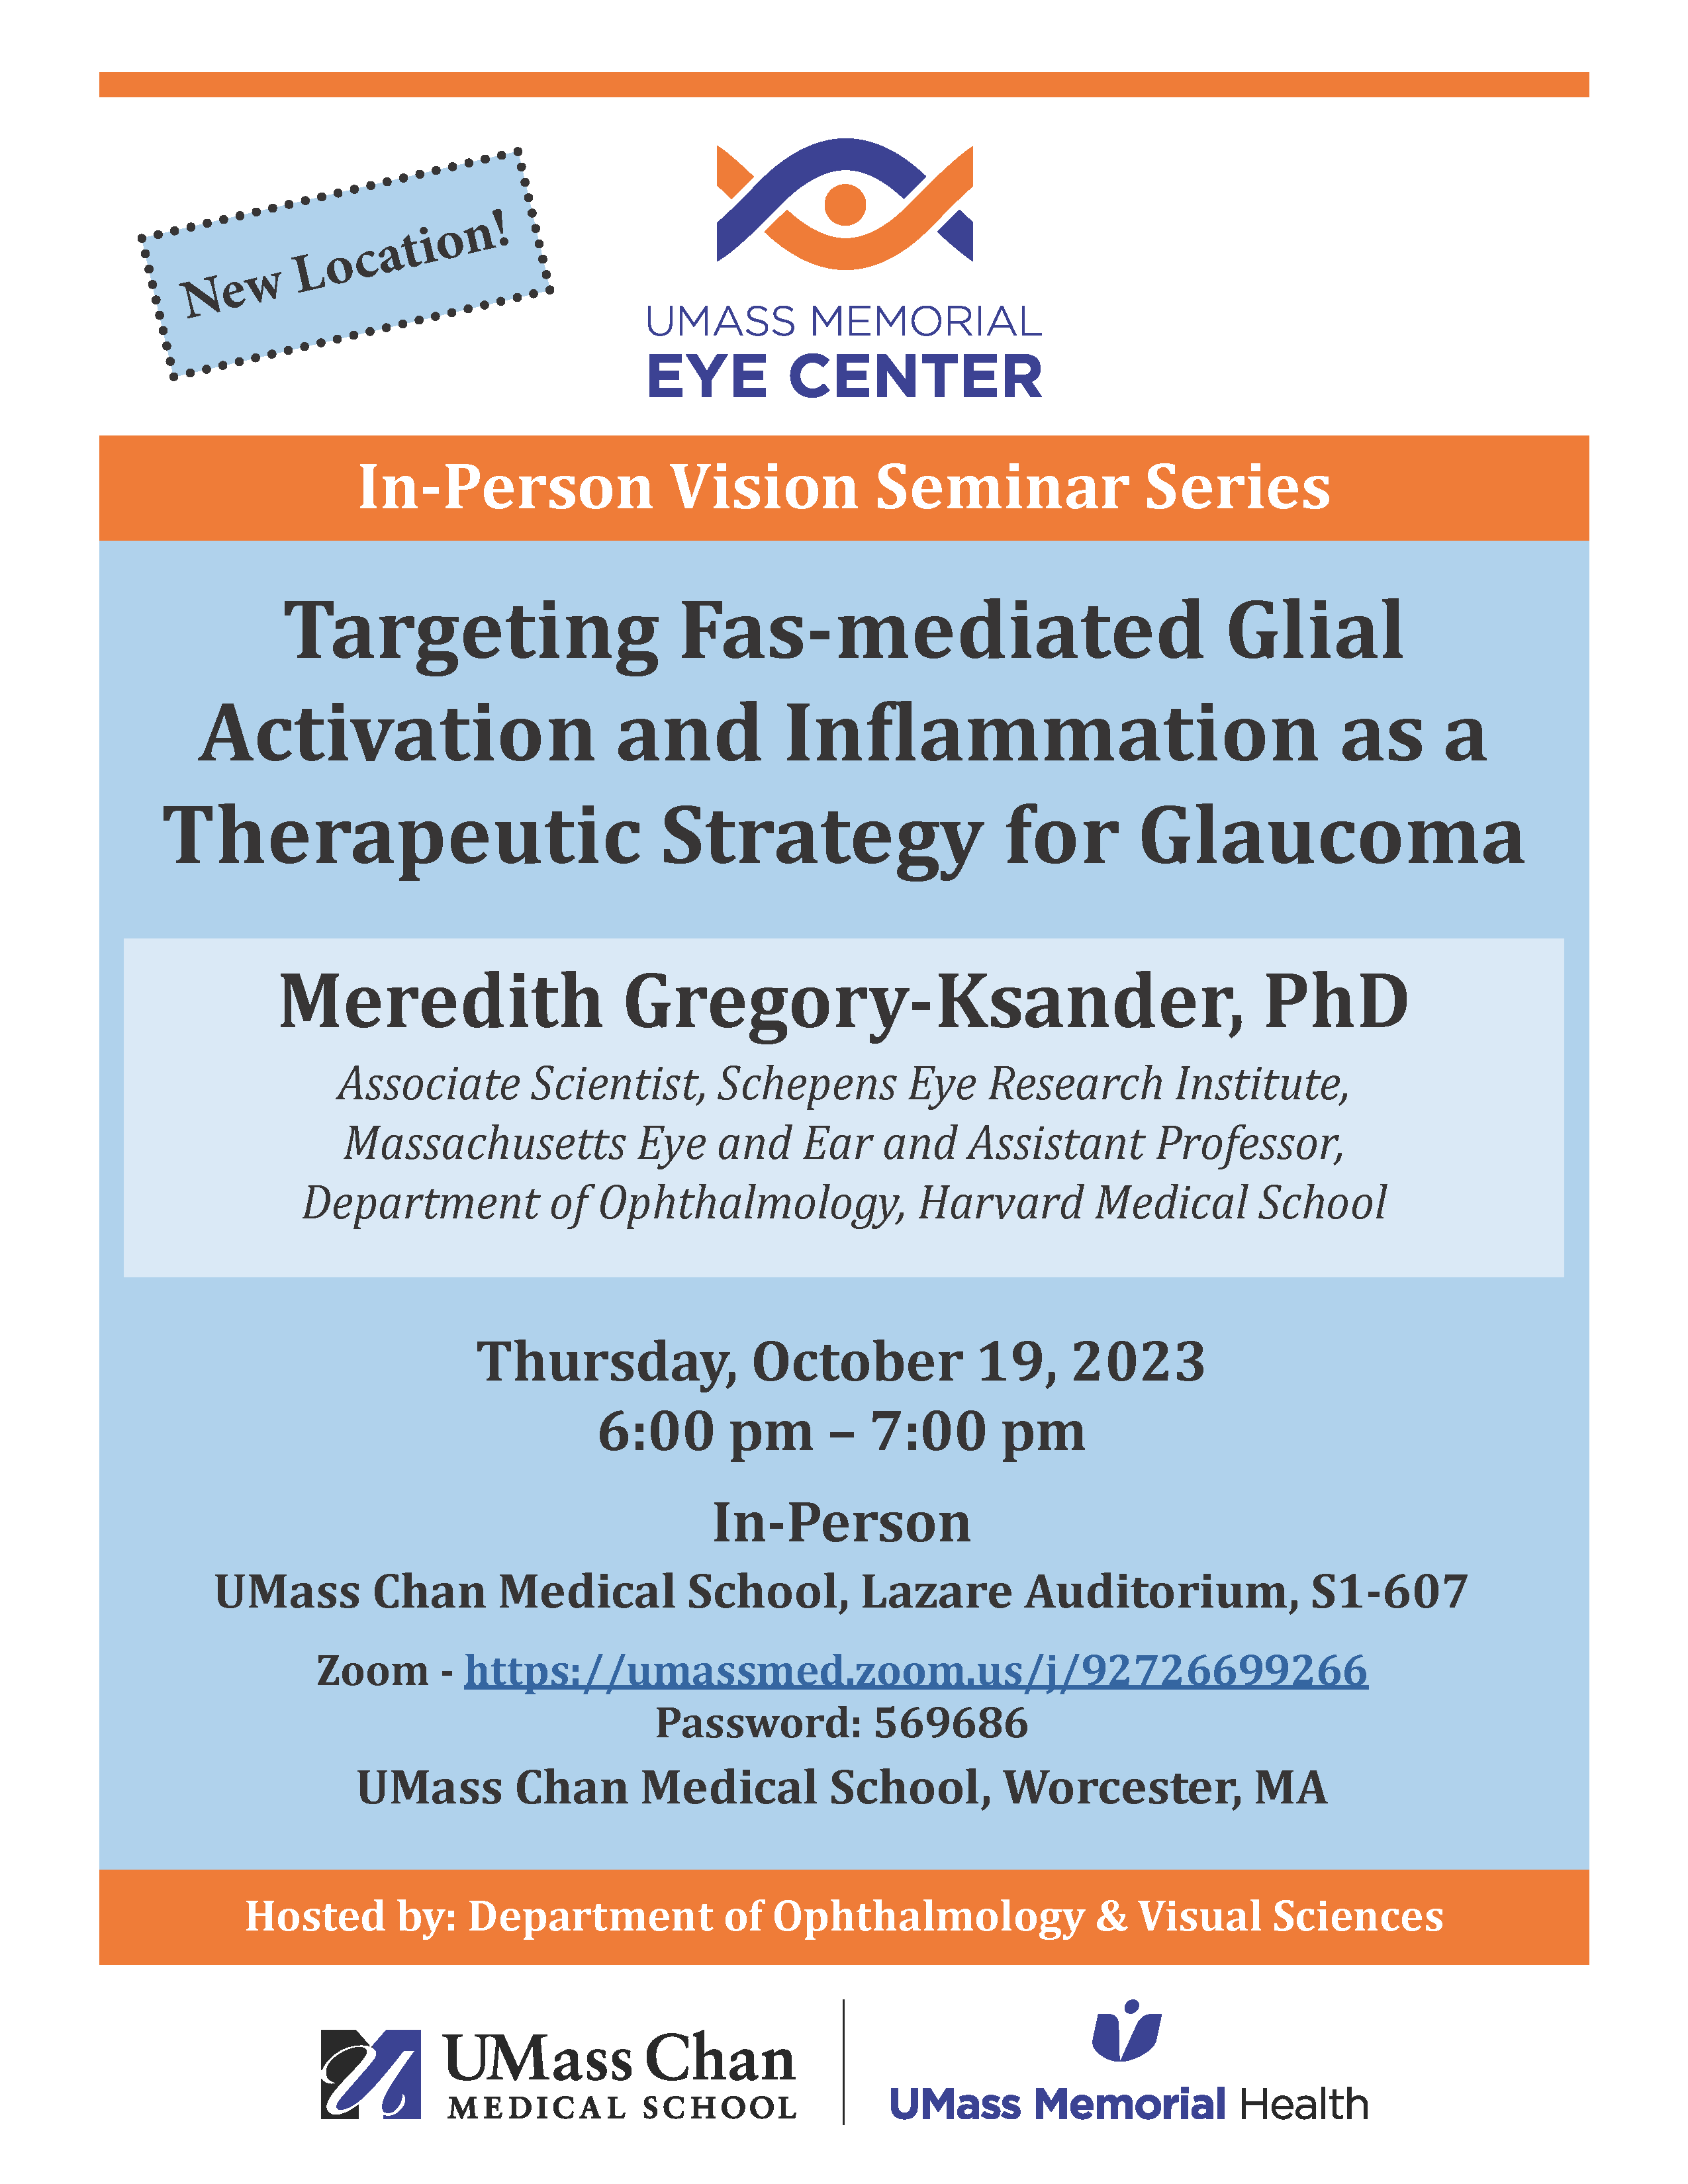 Vision Seminar Series Meredith Gregory-Ksander, PhD